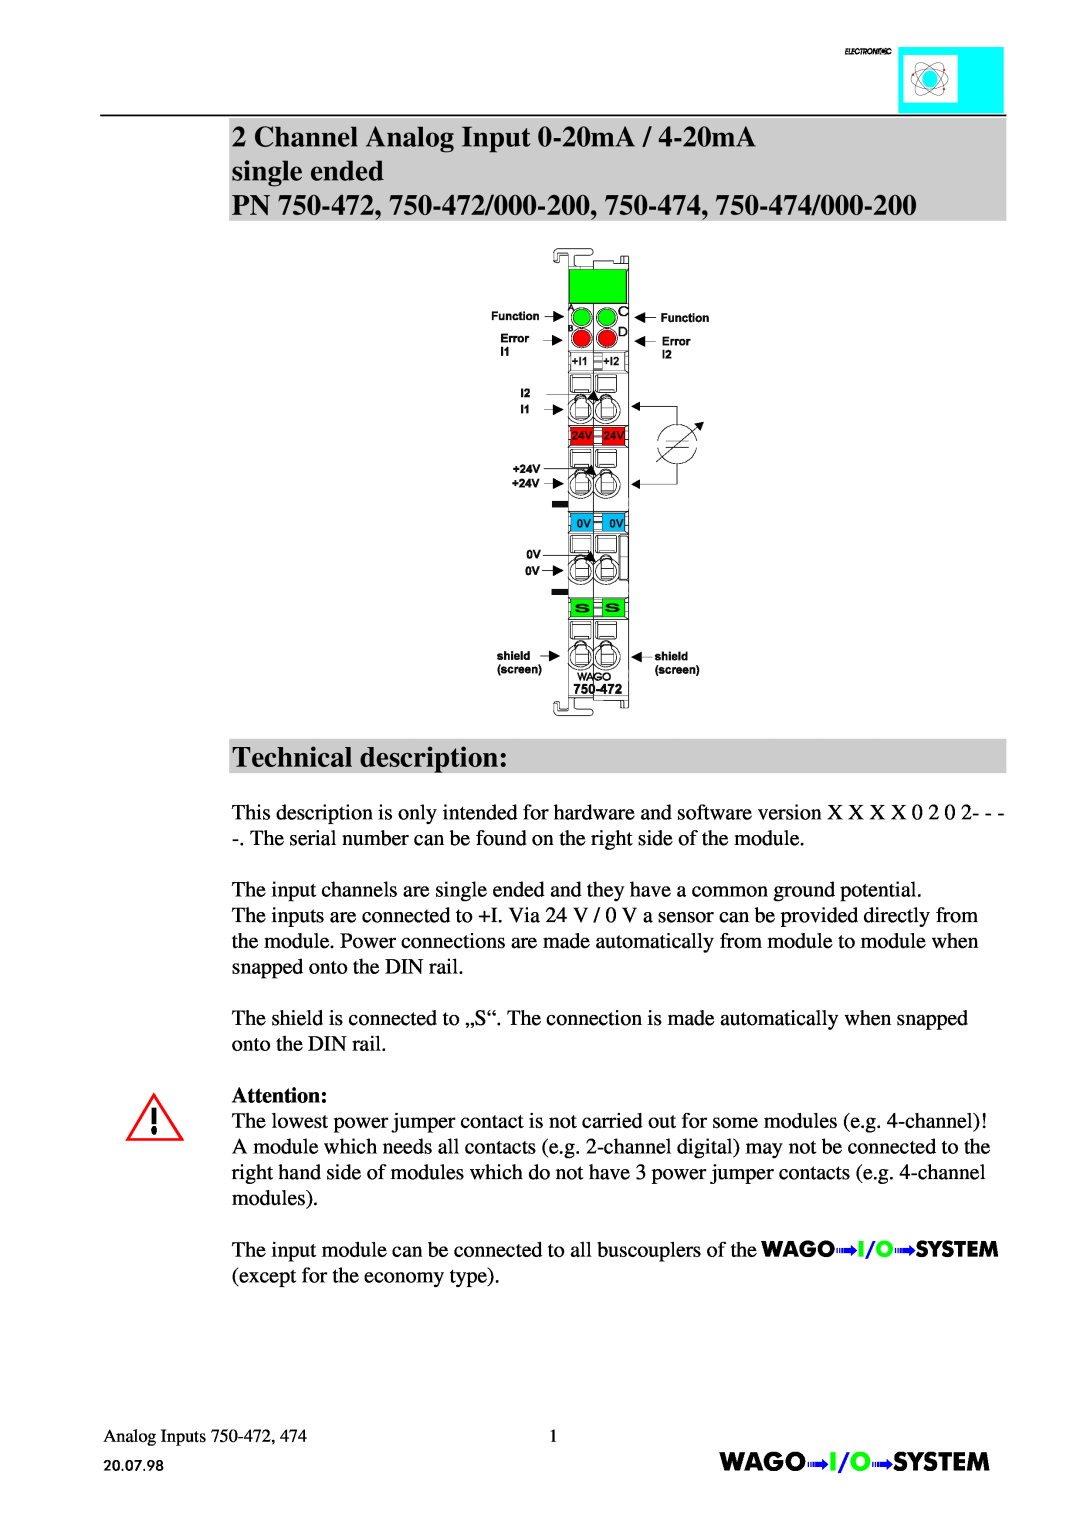 Quatech INTERBUS S manual Channel Analog Input 0-20mA / 4-20mA single ended, Technical description, AnalogInputs 750-472 